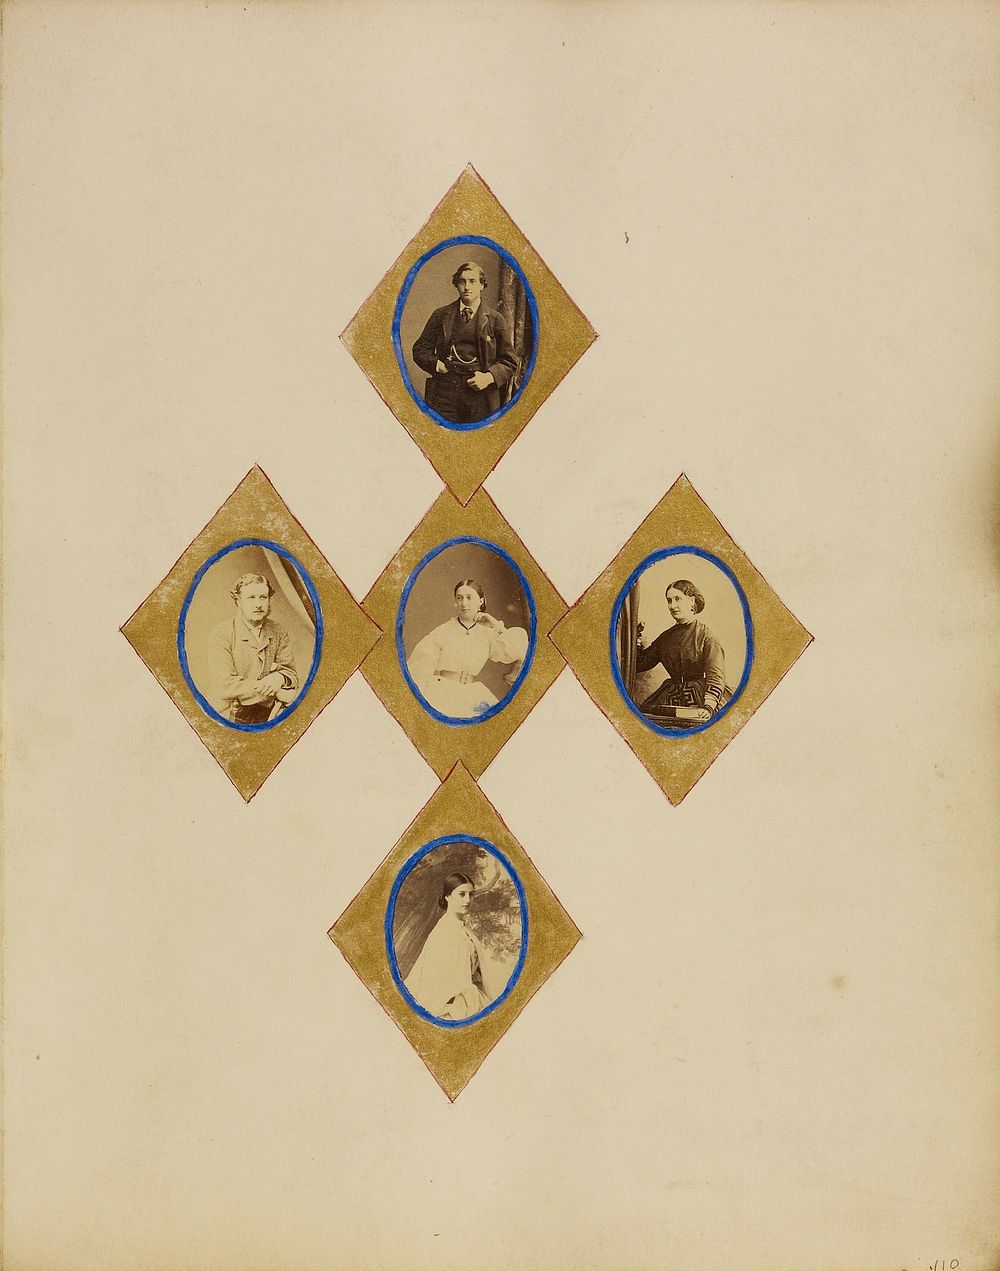 Photo collage of five portraits arranged into a diamond